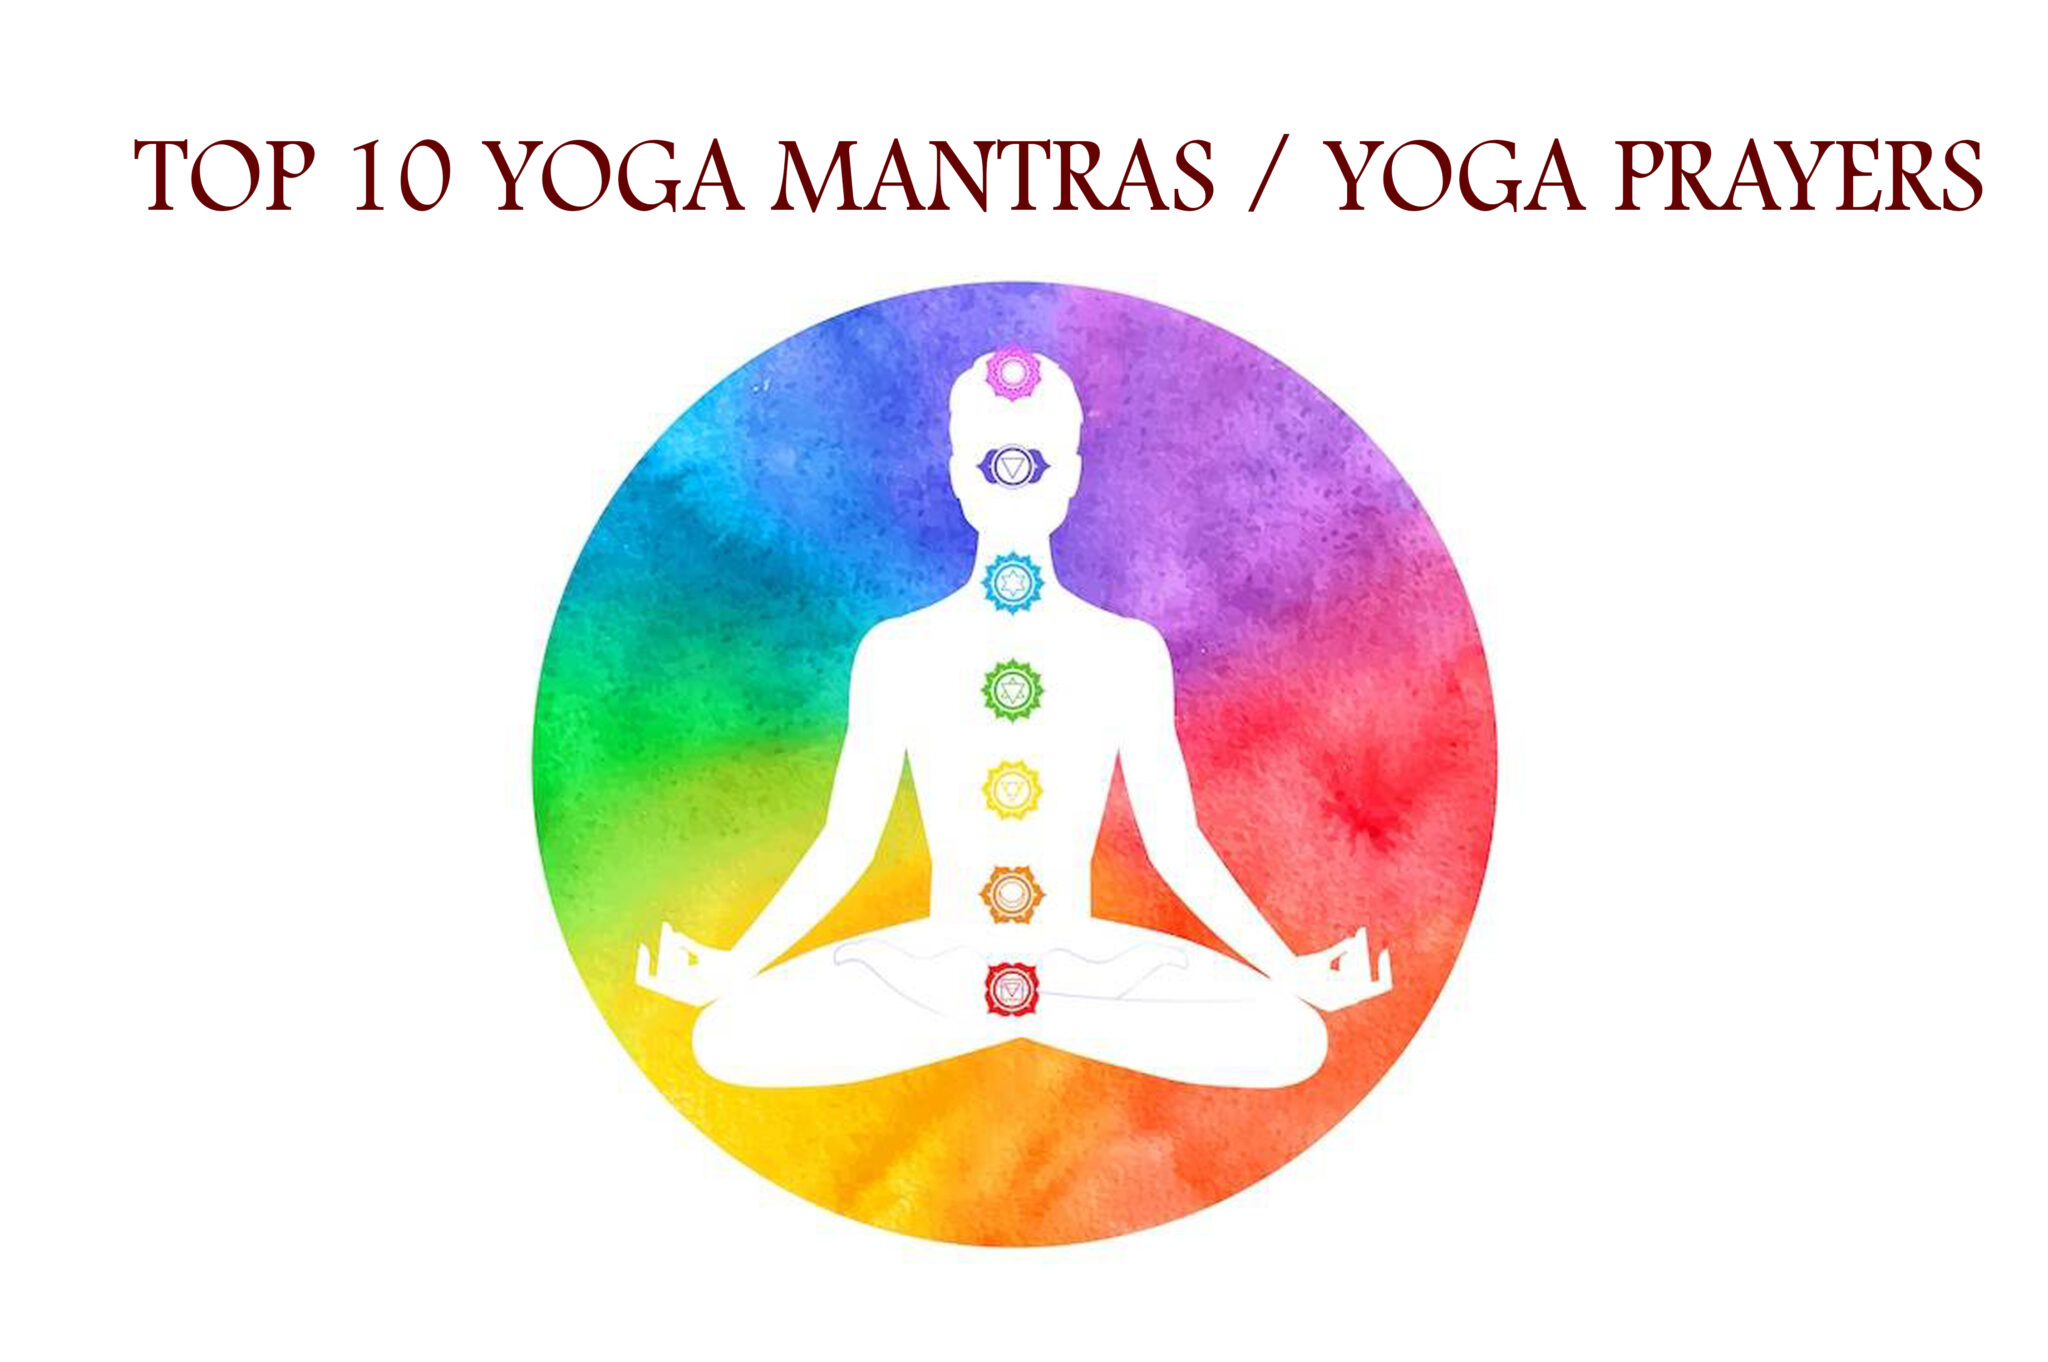 Top 10 Yoga Mantras / Yoga Prayers